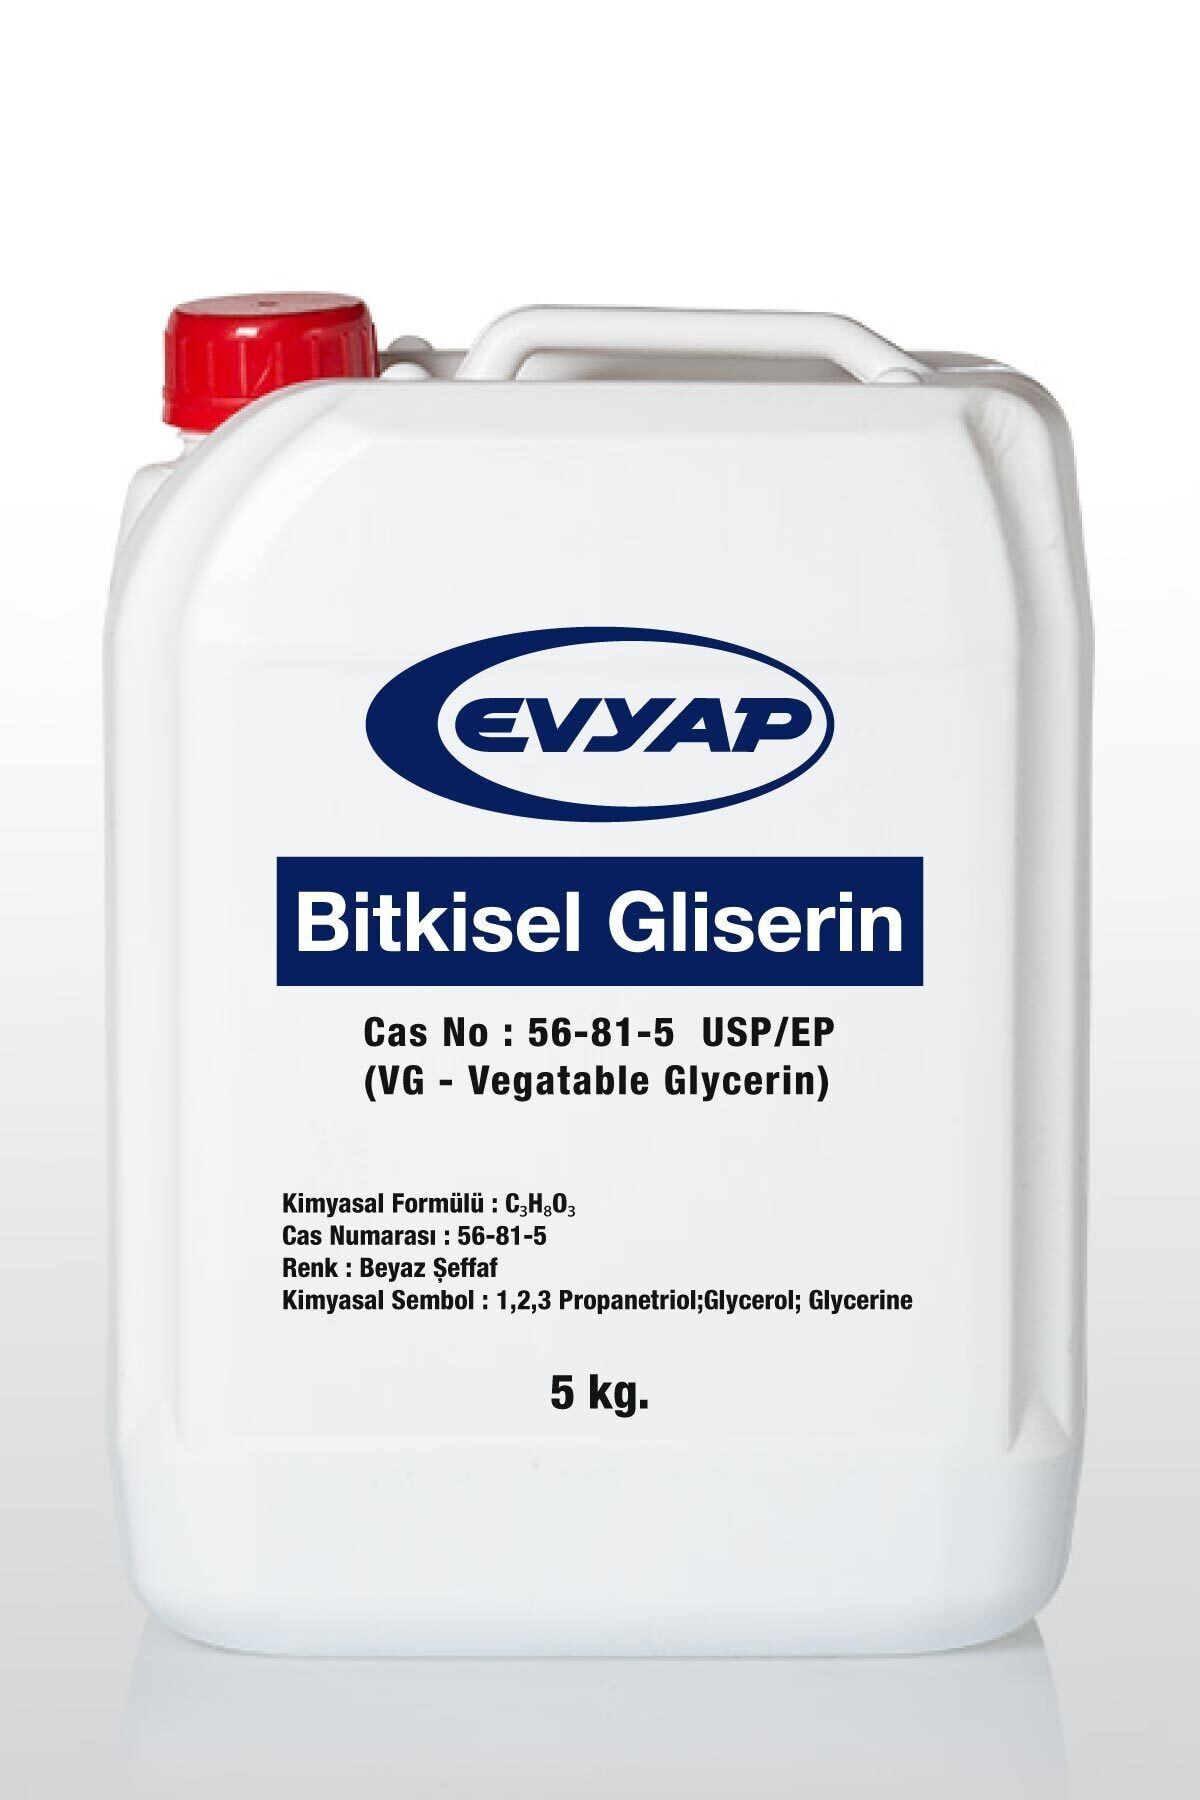 Evyap Bitkisel Gliserin(VG) 5 Kg.